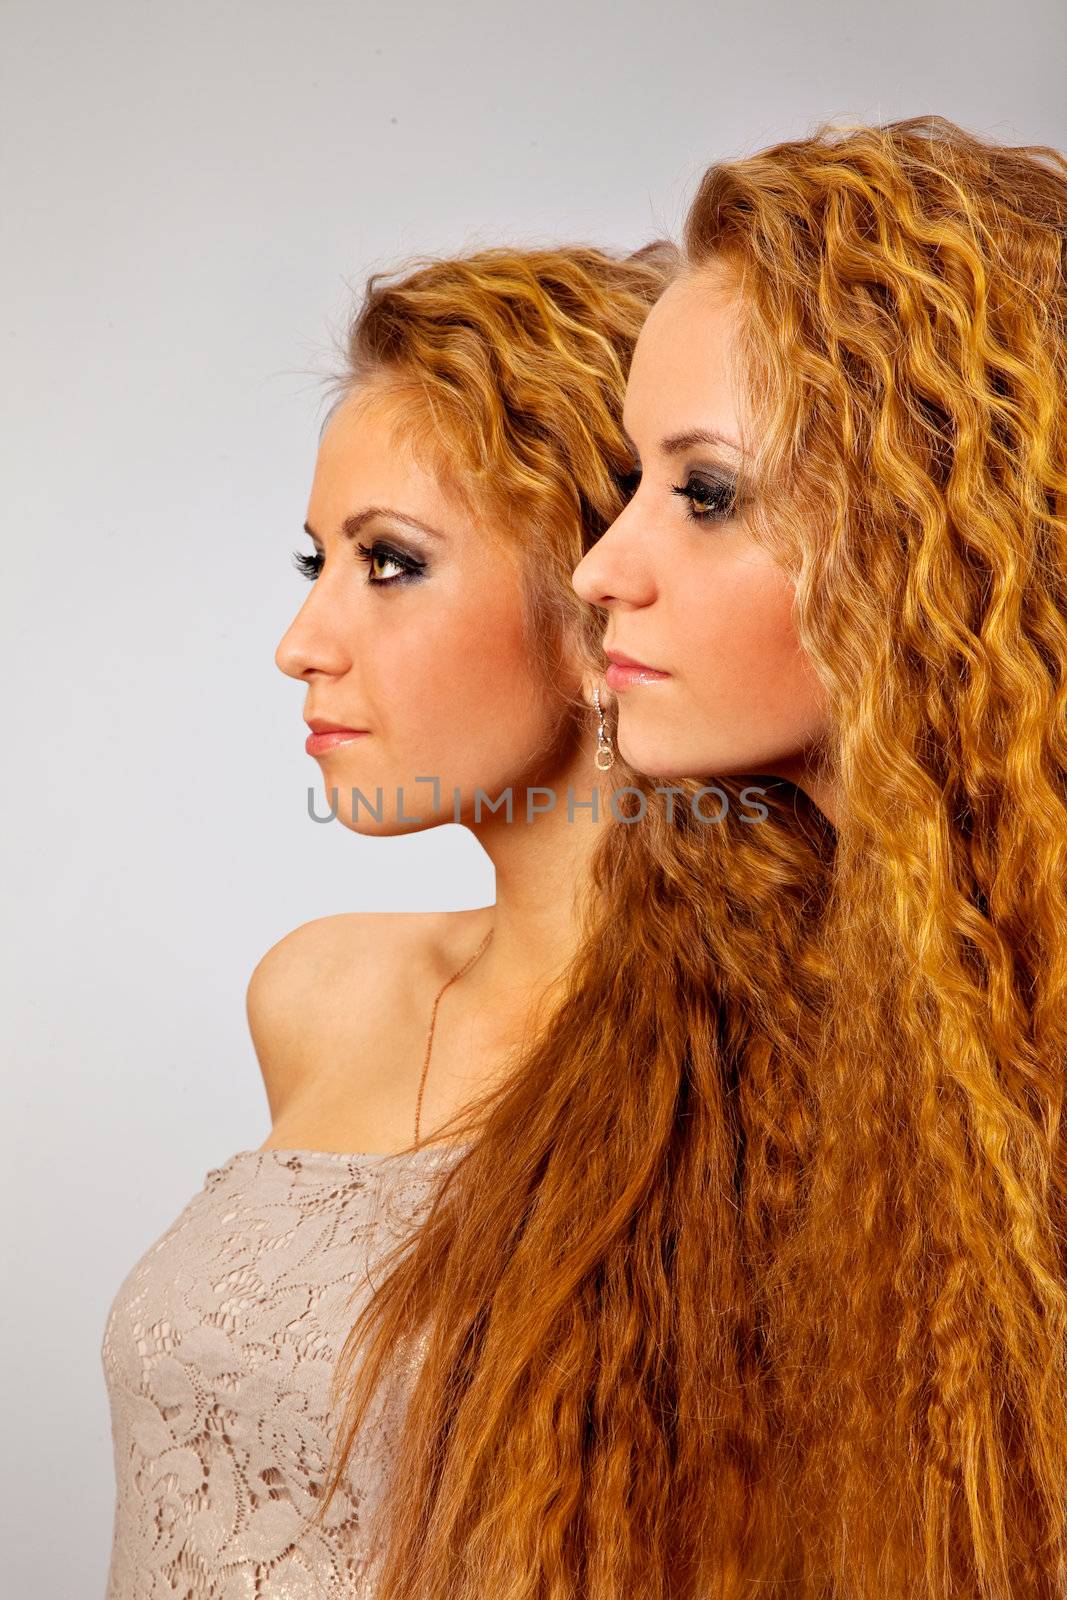 Sttudio shot portrait on isolated background of two sisters twin women friends